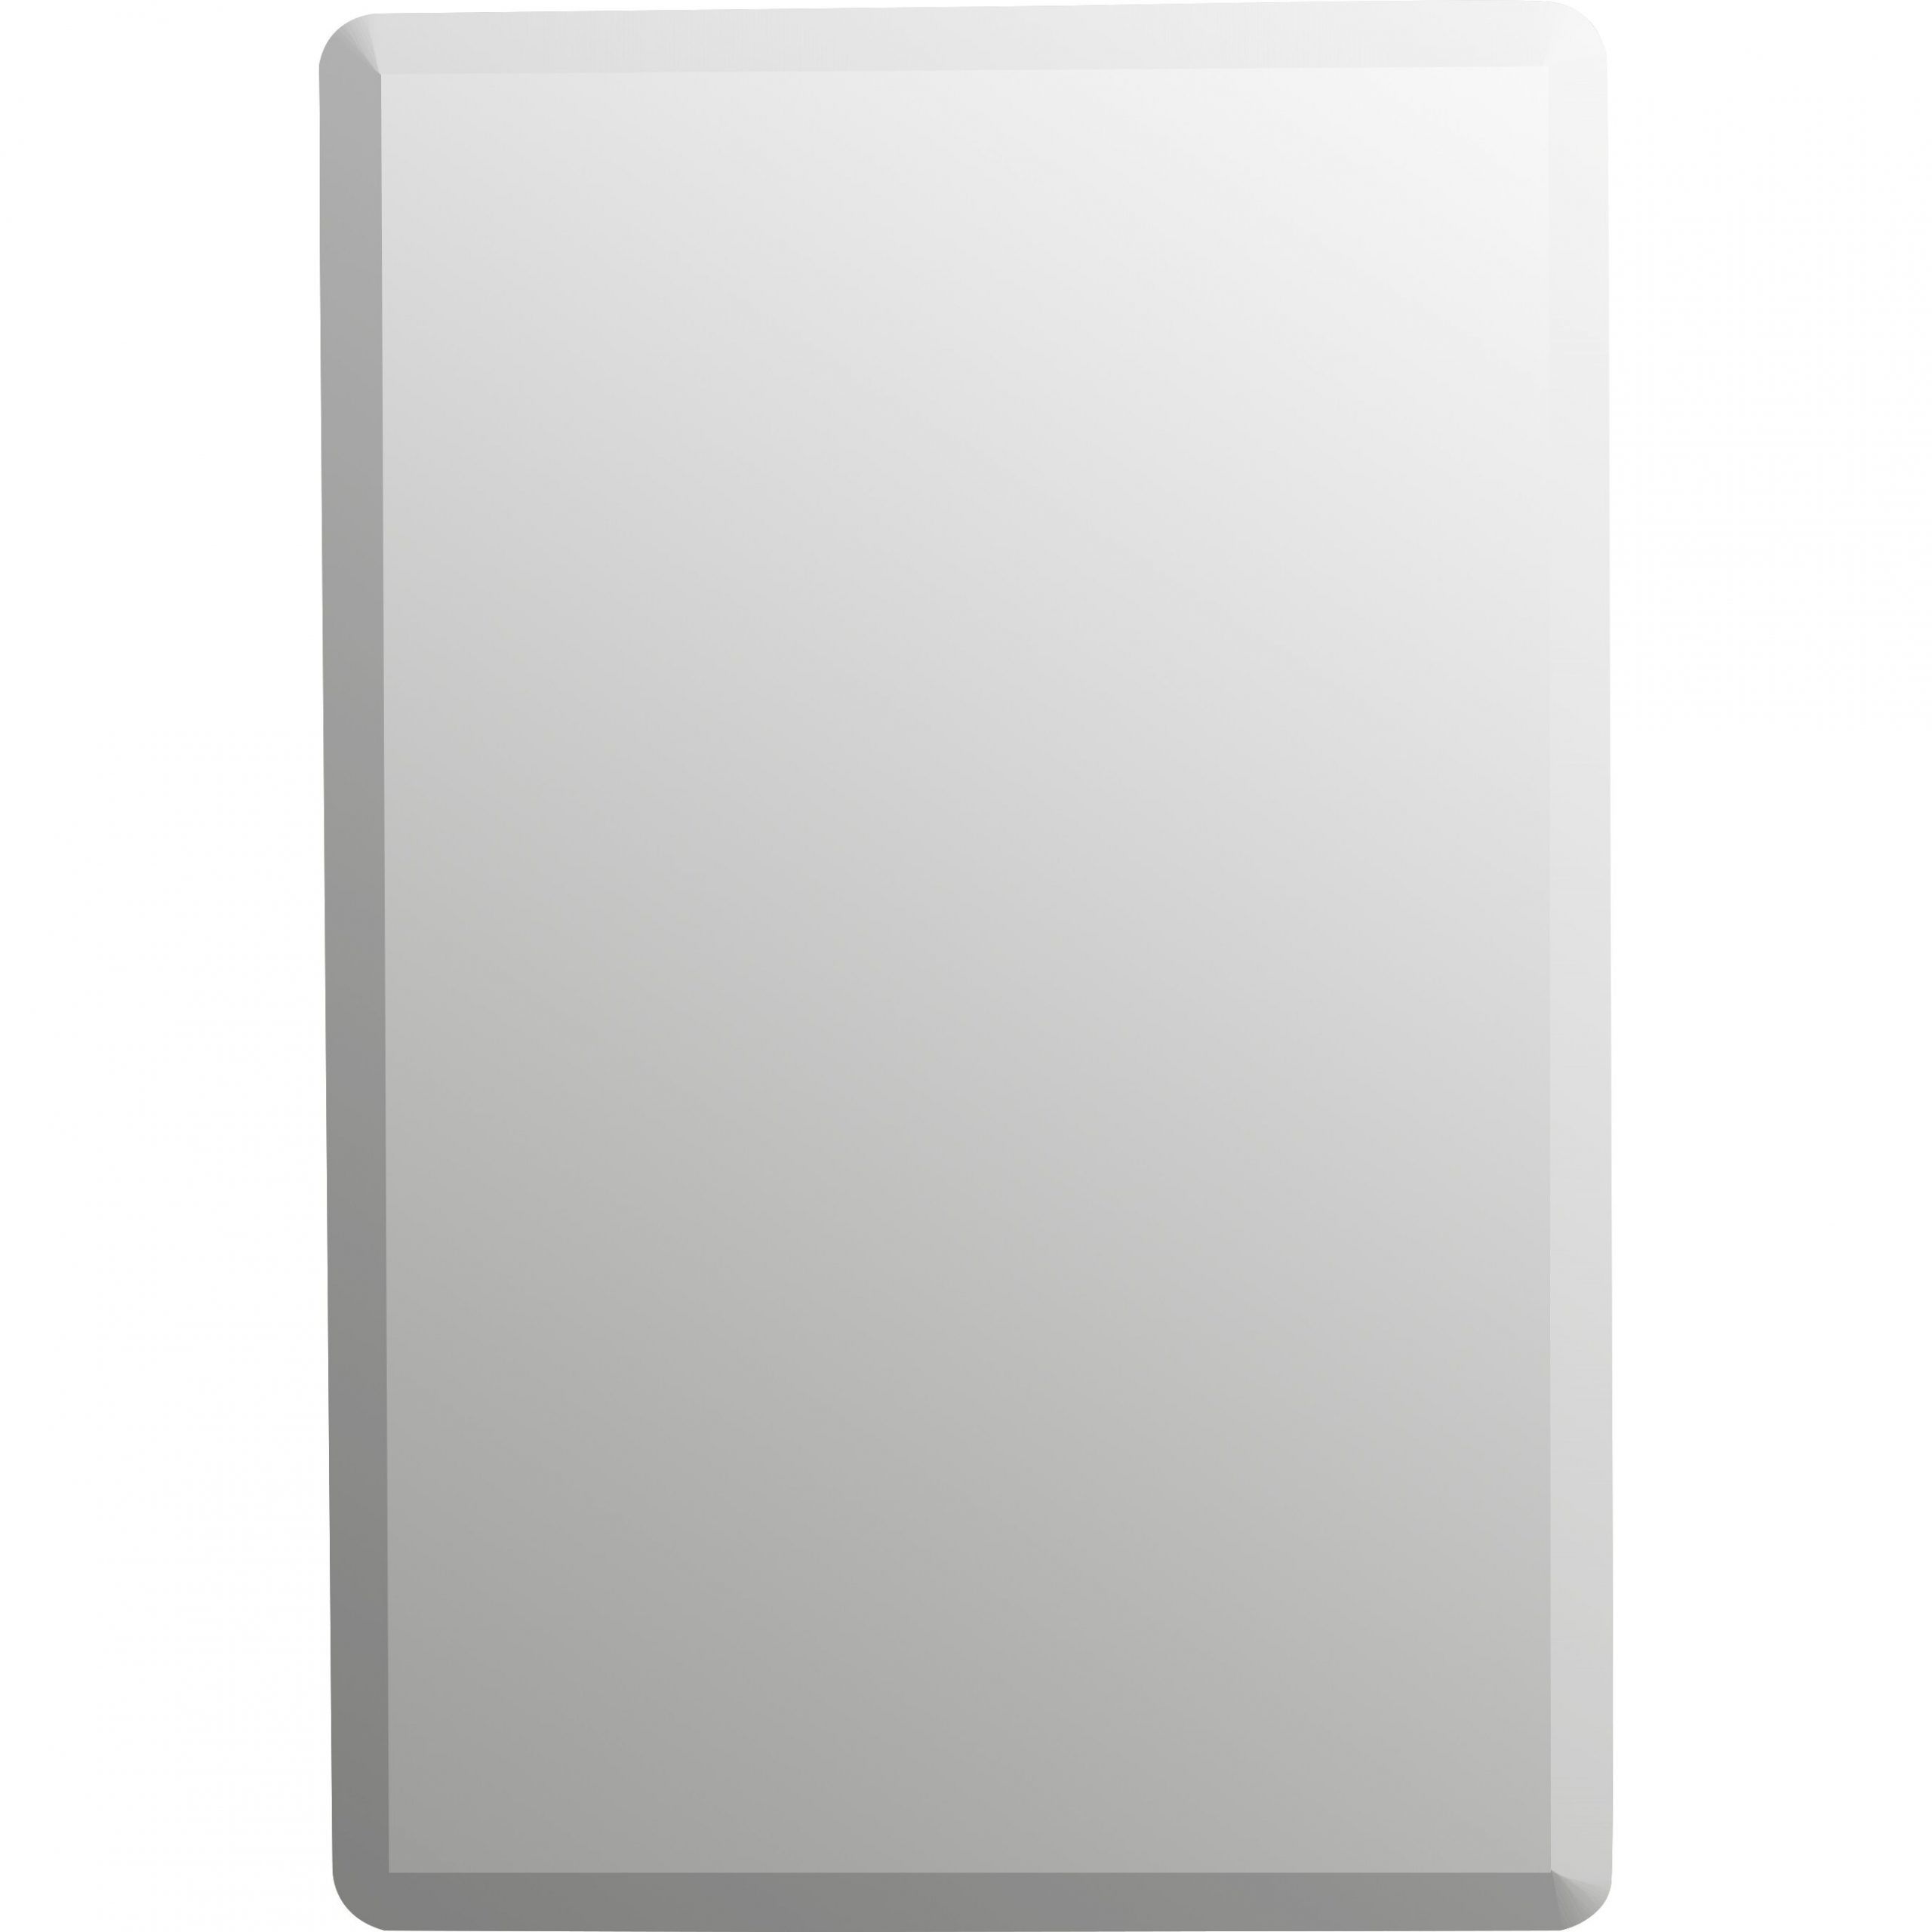 Kayden Frameless Wall Mirror | Wayfair With Regard To Kayden Accent Mirrors (View 11 of 15)